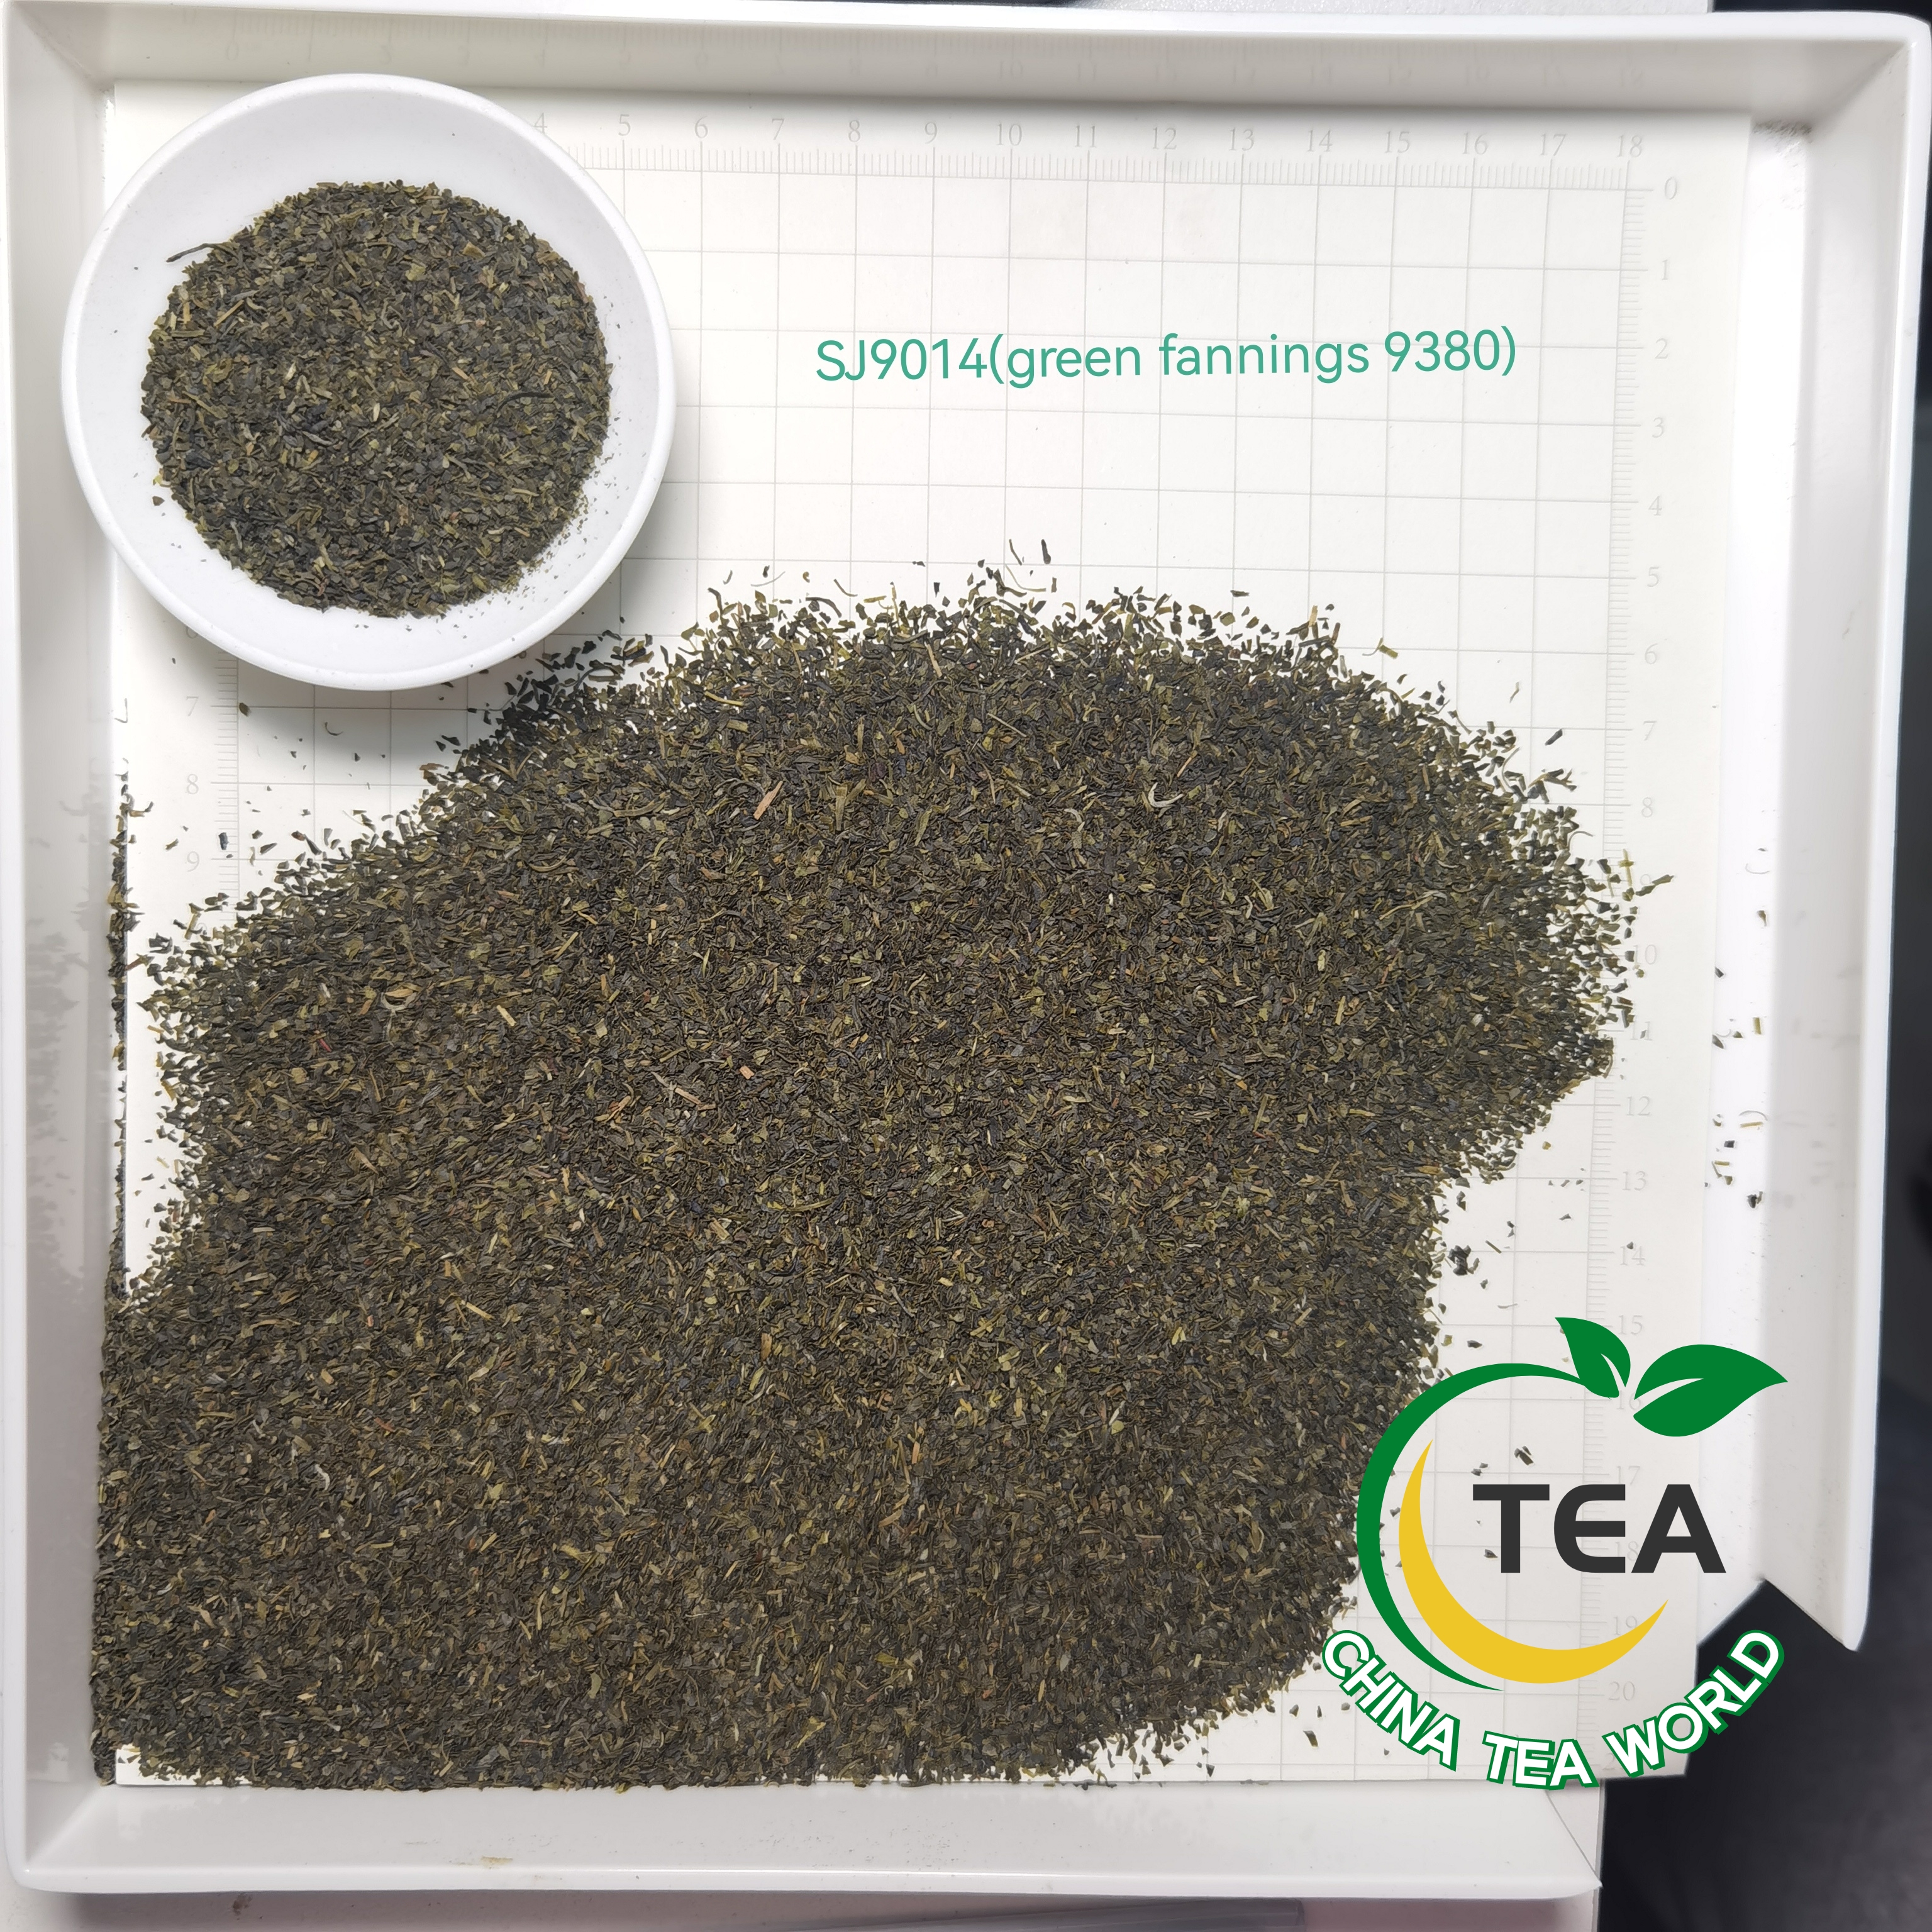 Green tea fannings for tea bag